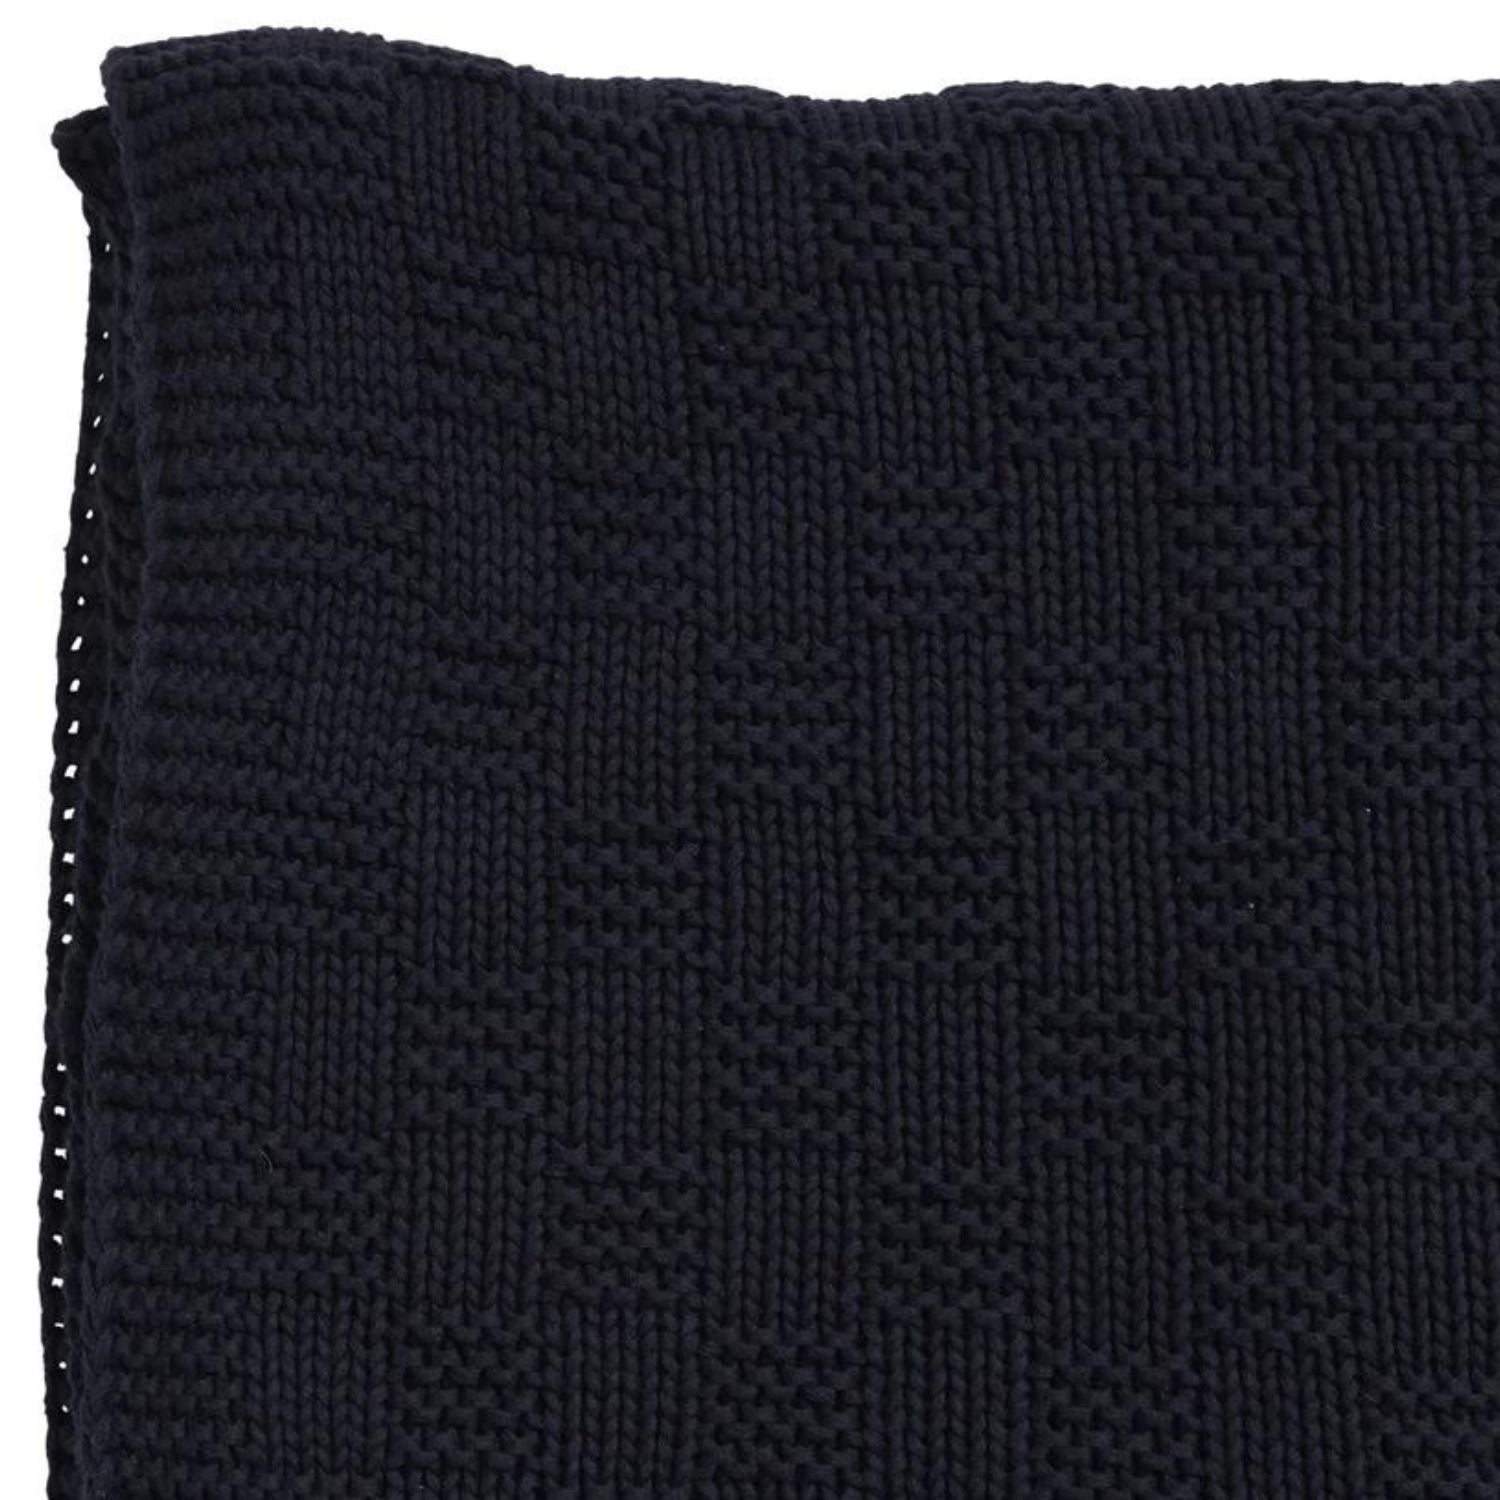 Navy Throw Weave Pattern 130x170